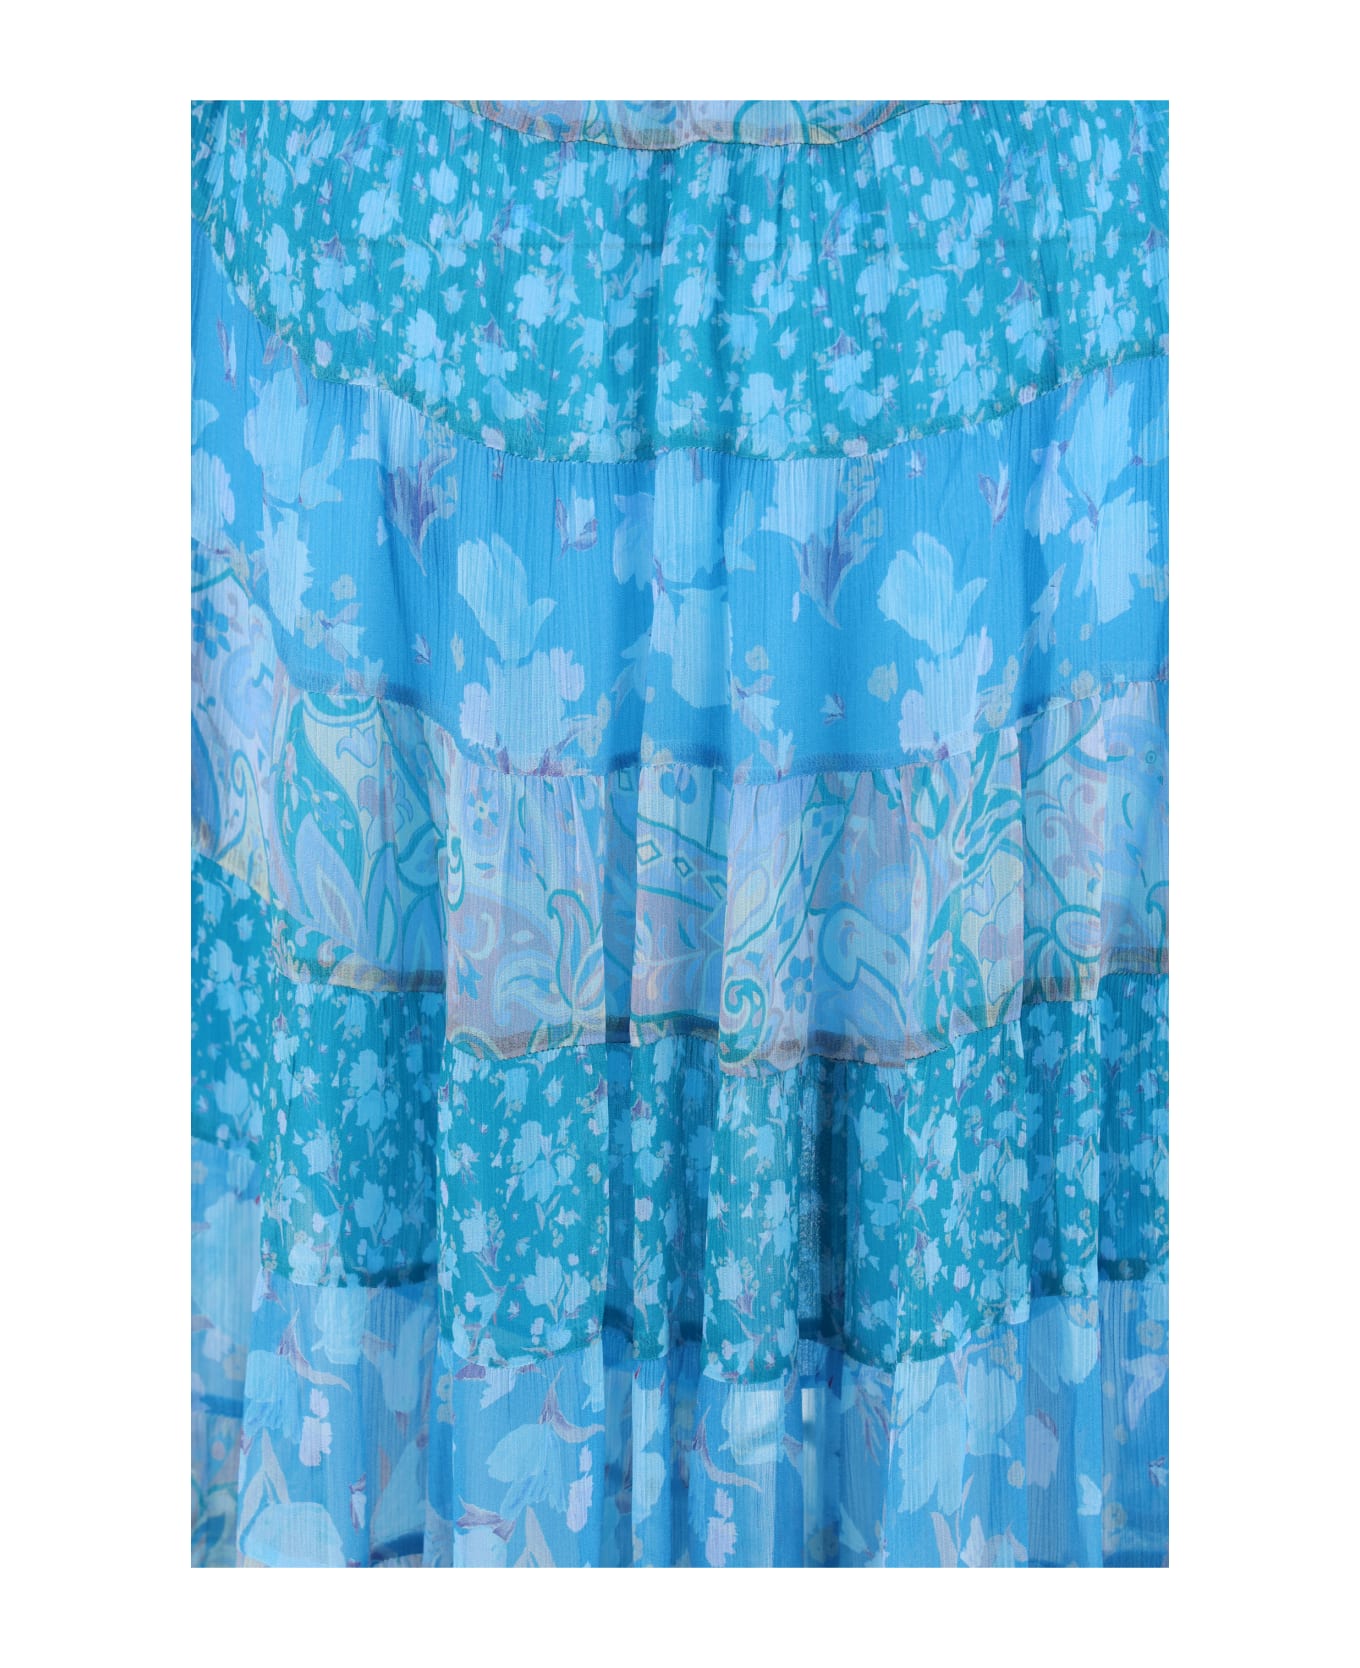 RIXO Agyness Dress - Havana Floral Blue Mix ワンピース＆ドレス